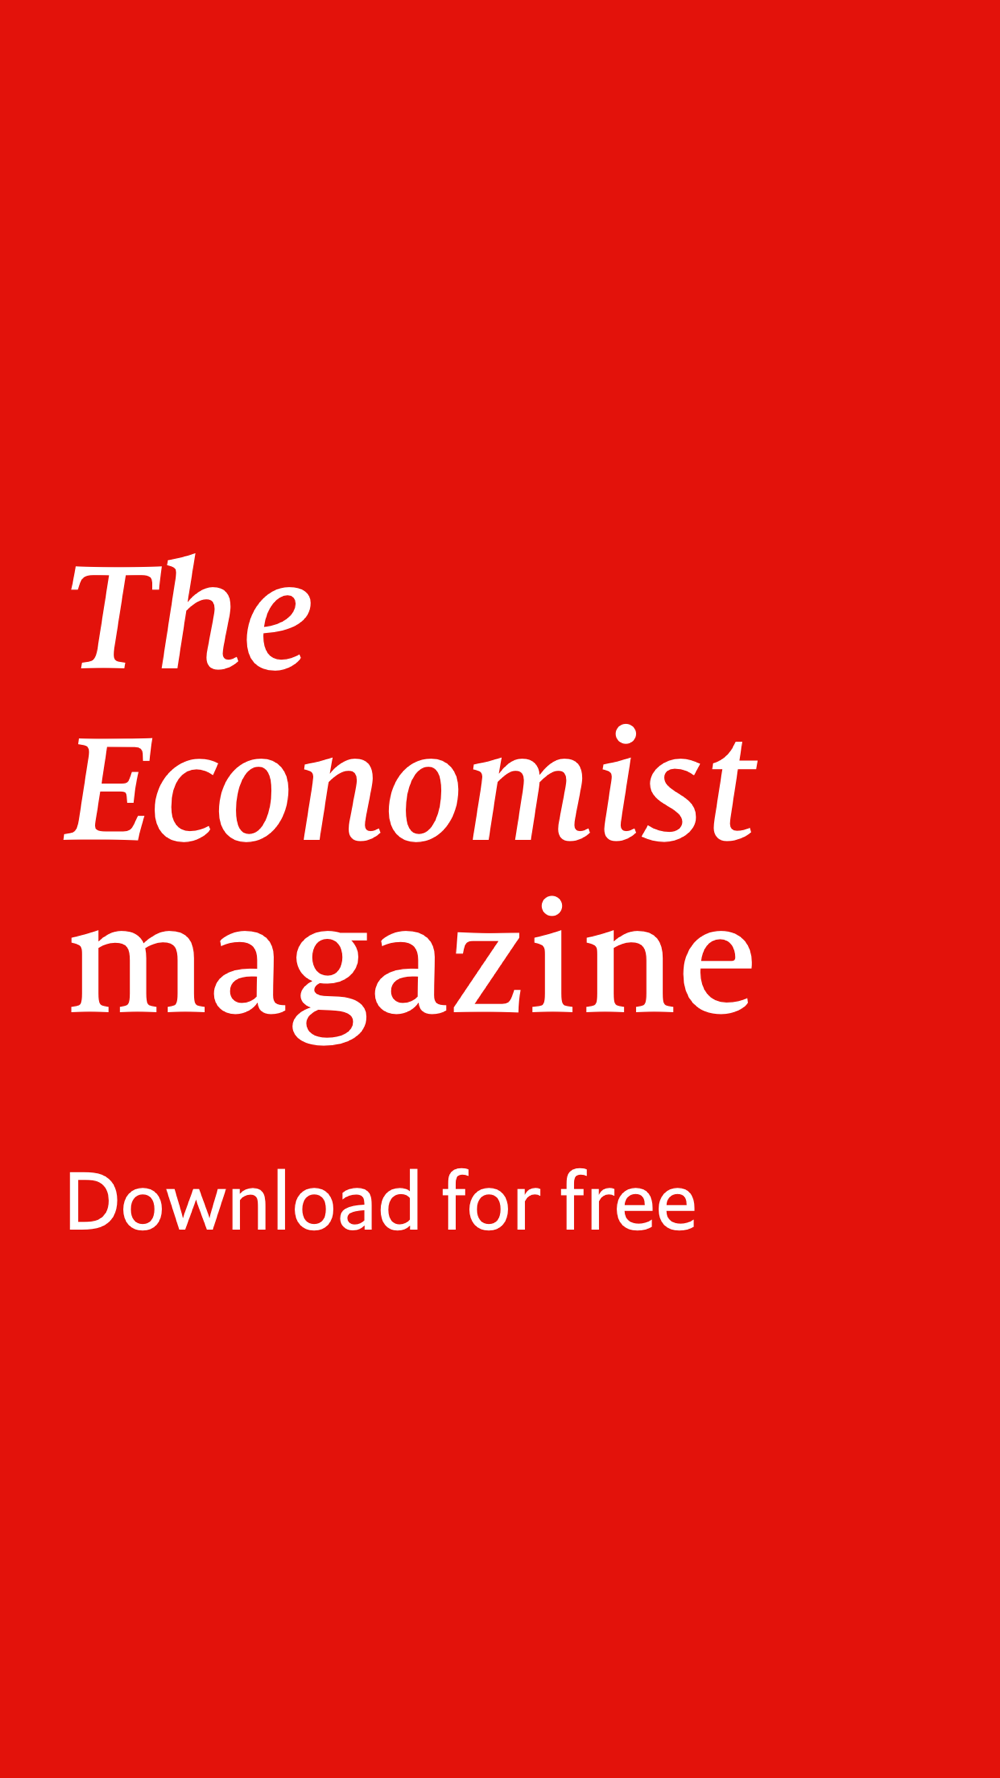 The economist 2021 free download